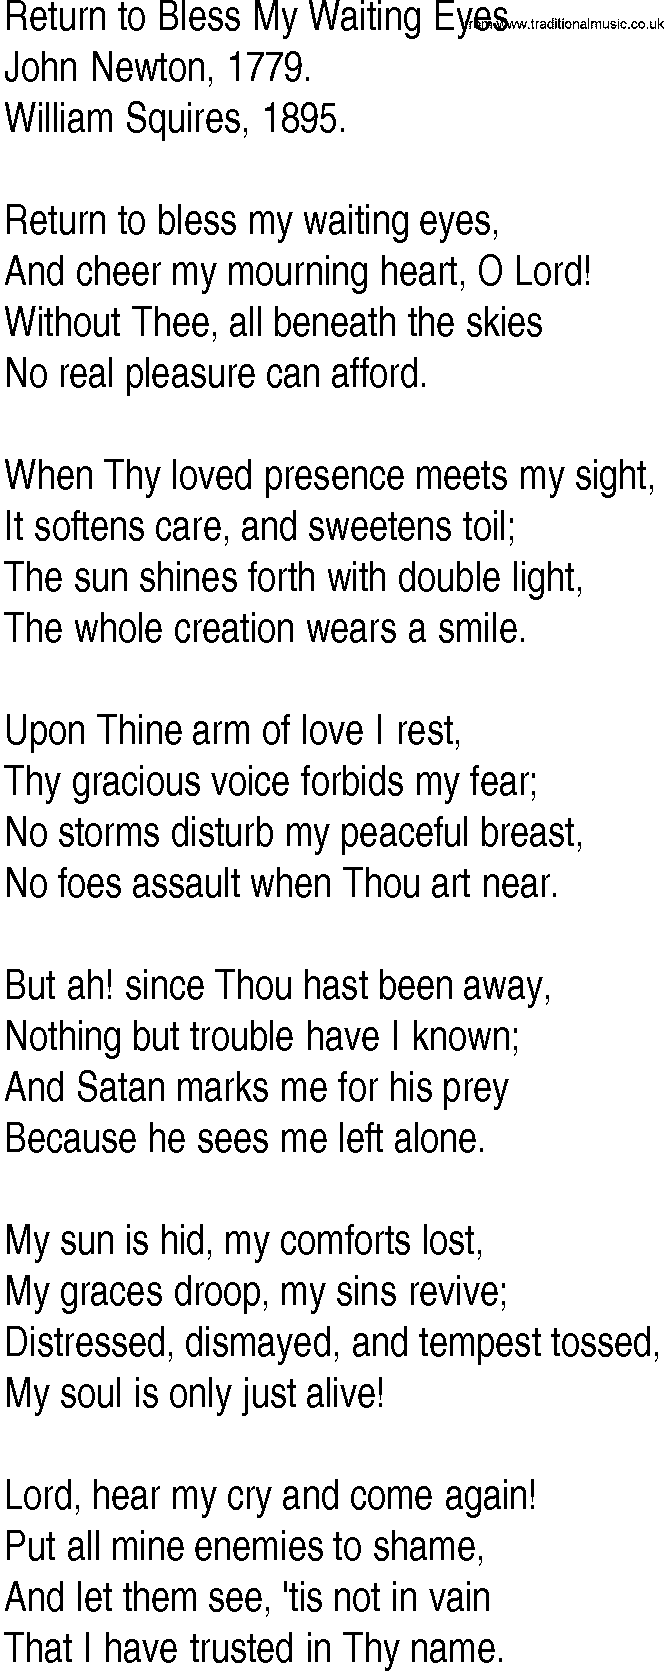 Hymn and Gospel Song: Return to Bless My Waiting Eyes by John Newton lyrics